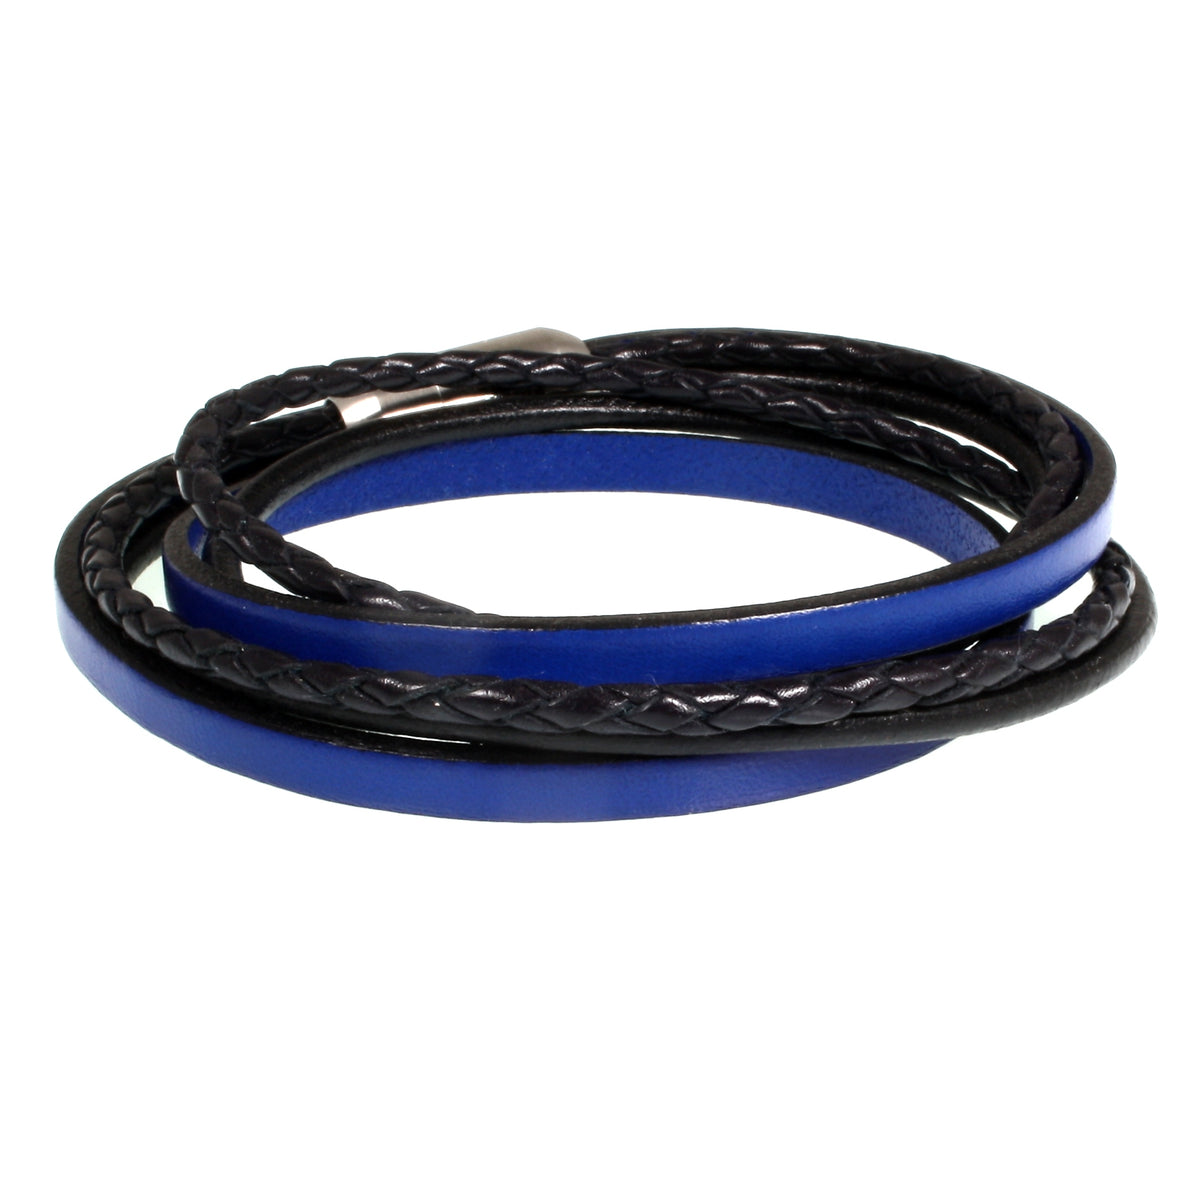 Herren-Leder-Armband-Mixed-schwarz-blau-rund-Edelstahlverschluss-hinten-wavepirate-shop-lf